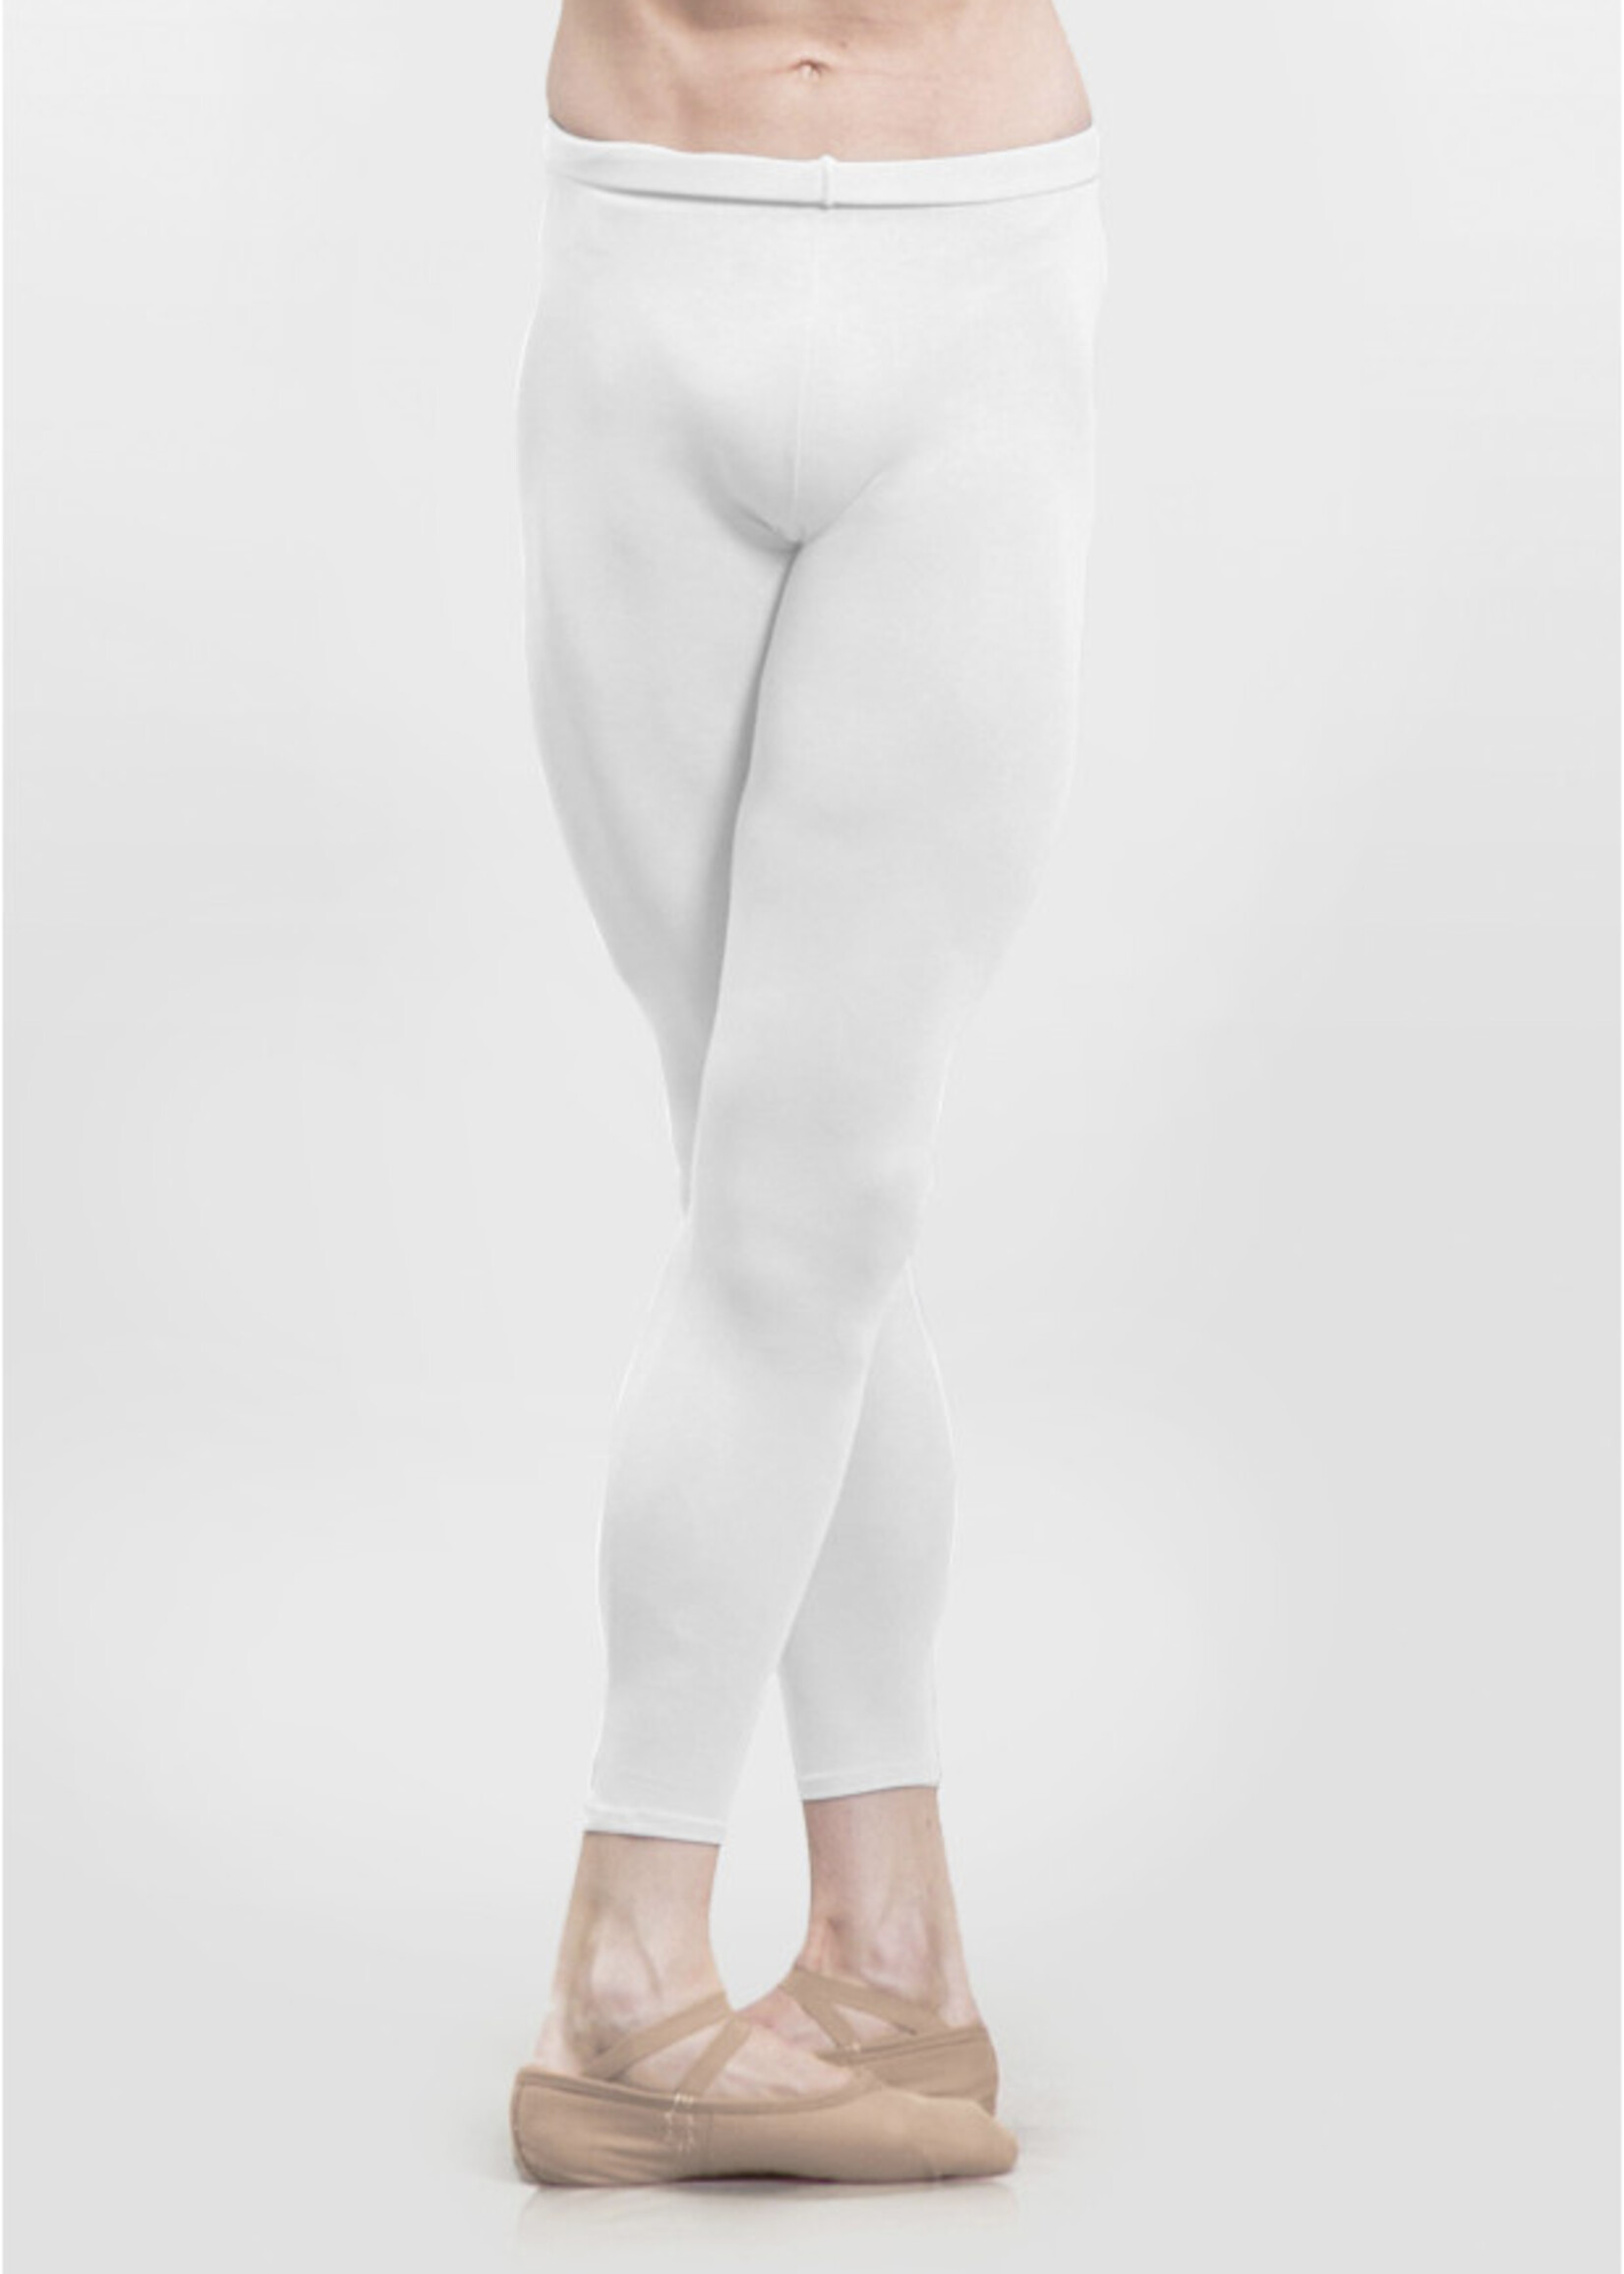 https://cdn.shoplightspeed.com/shops/653812/files/58242537/1652x2313x1/wear-moi-alban-boys-footless-tights.jpg